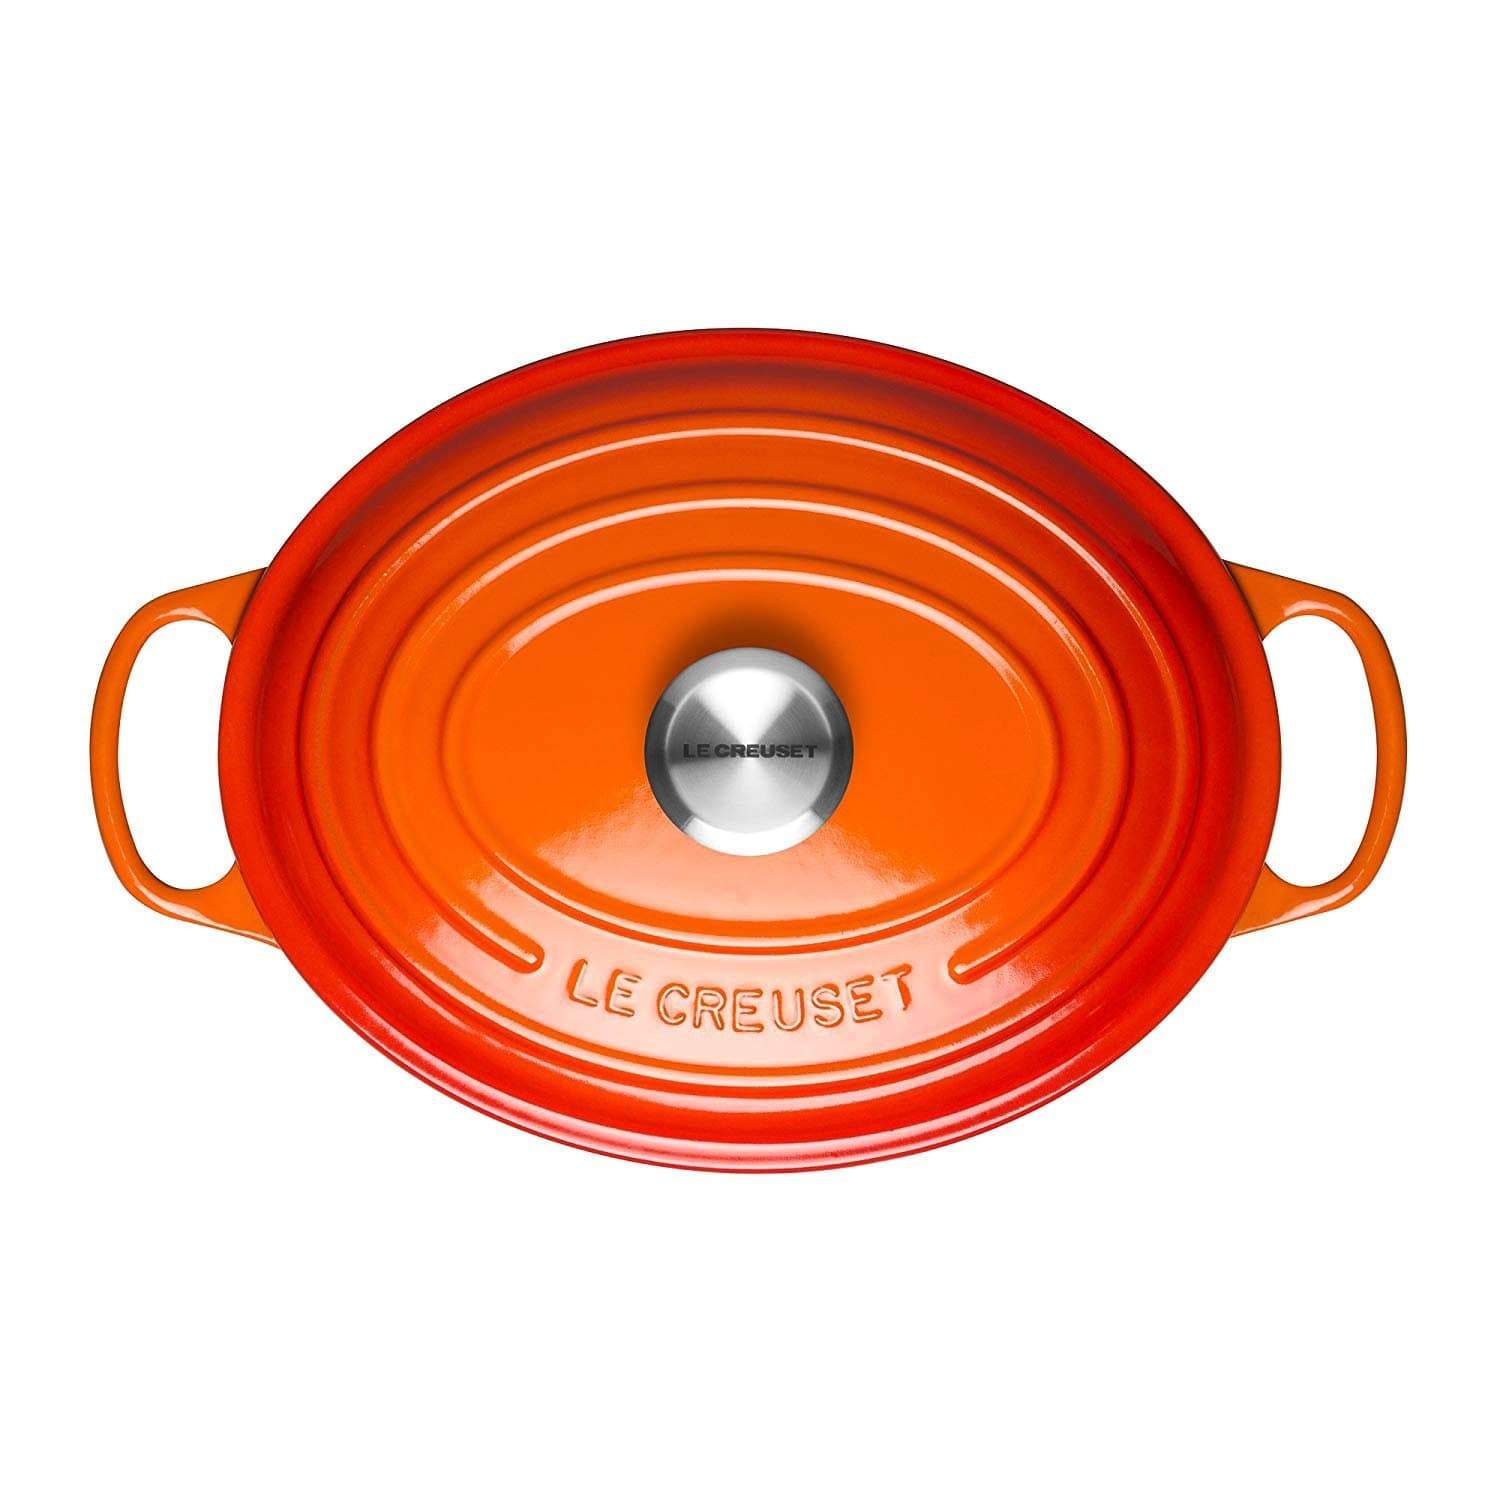 Le Creuset Signature Oval Casserole - Flame, 4.7 Litre - 21178290902430 - Jashanmal Home